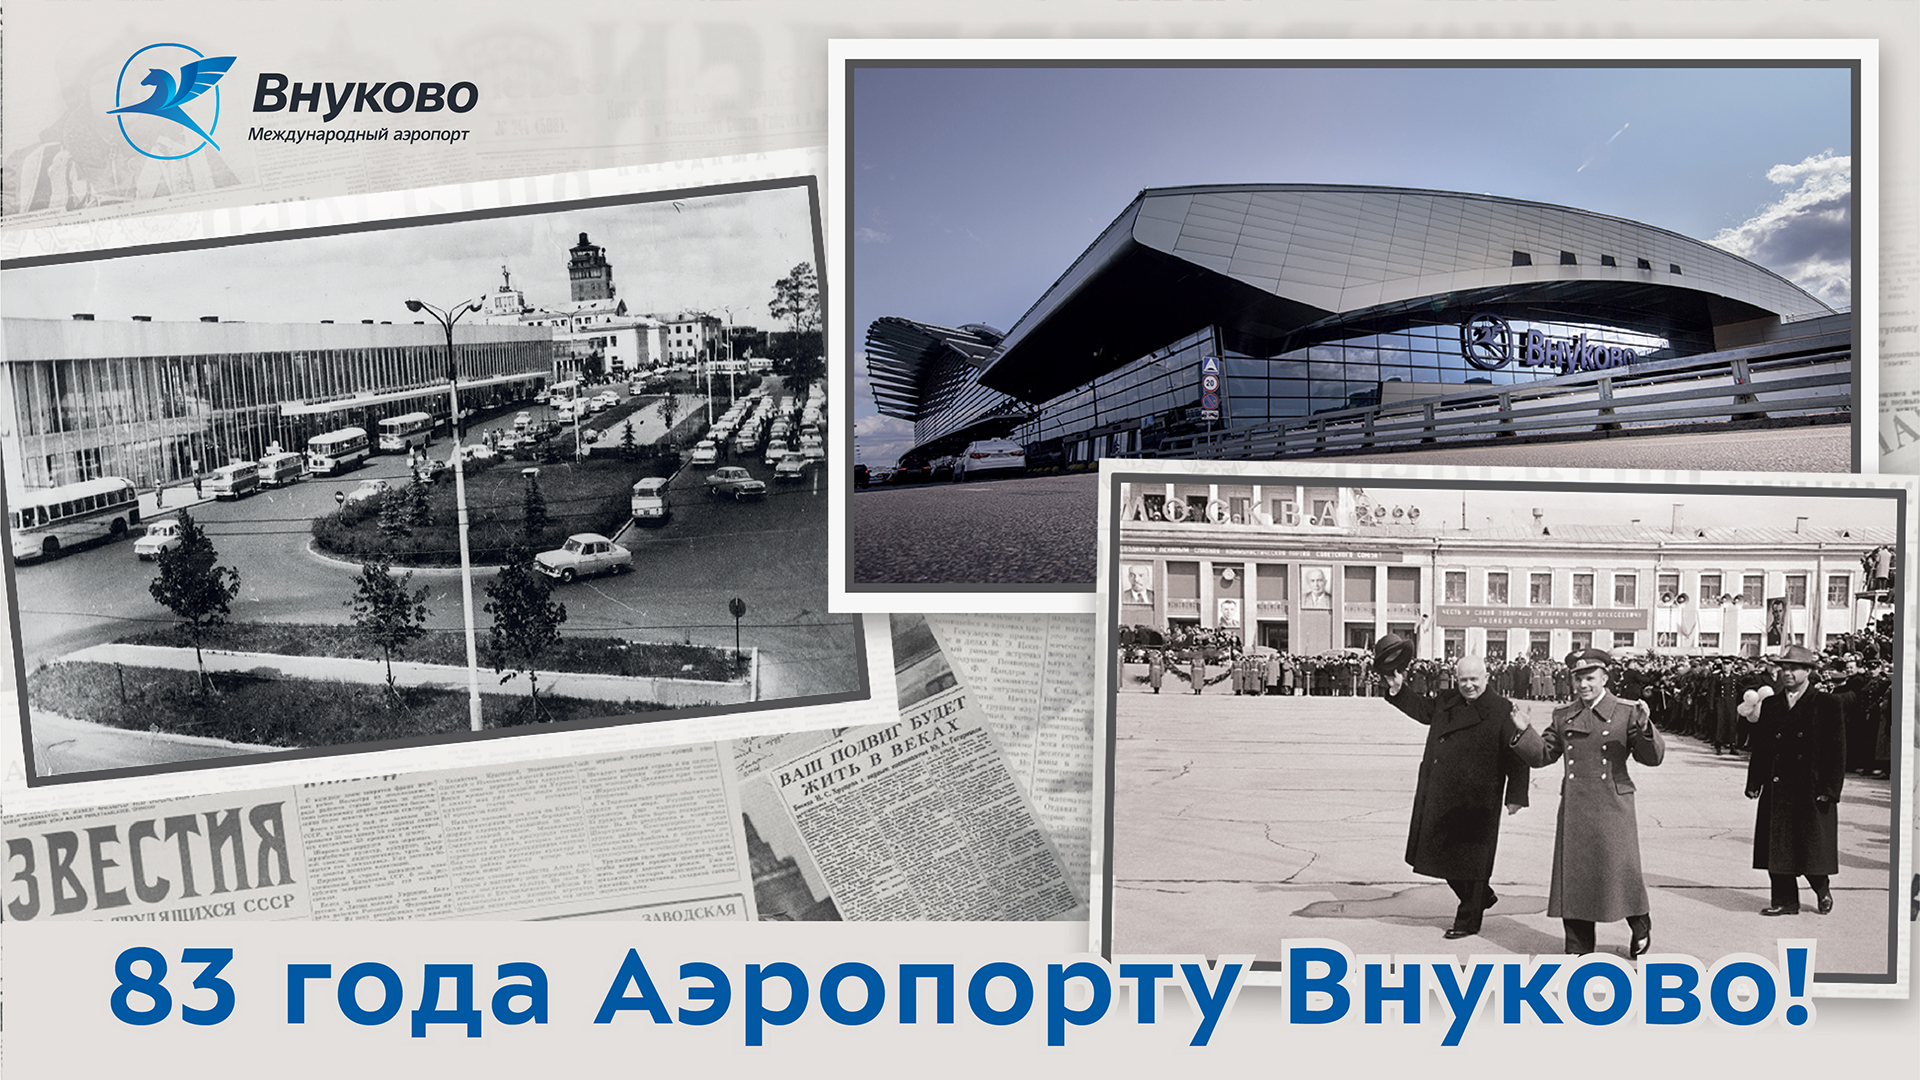 Vnukovo International Airport celebrates 83 years of development and reliability